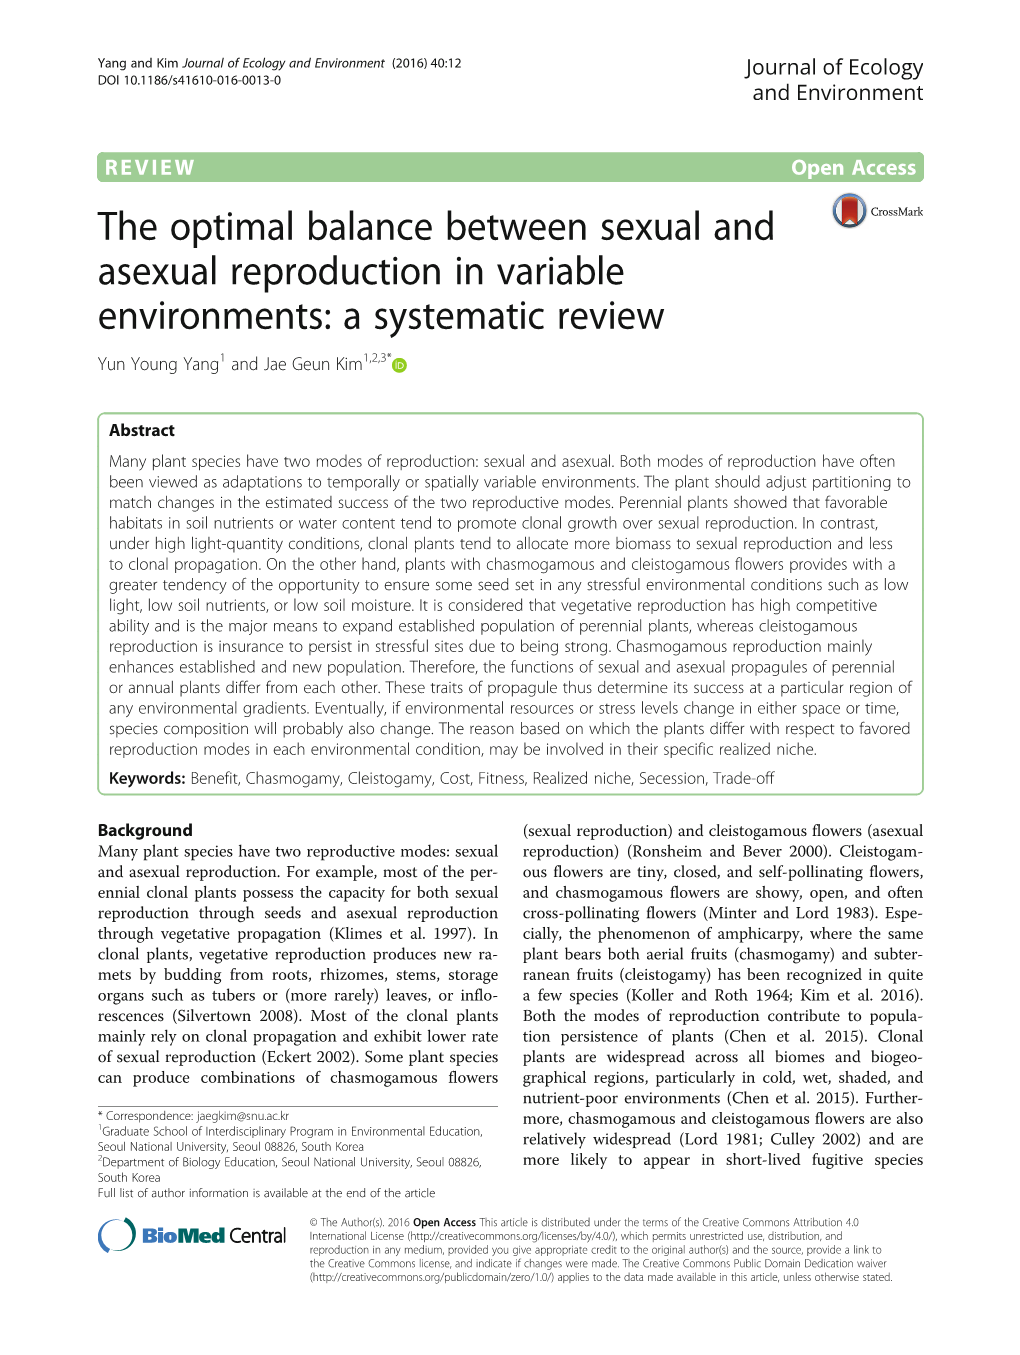 The Optimal Balance Between Sexual and Asexual Reproduction in Variable Environments: a Systematic Review Yun Young Yang1 and Jae Geun Kim1,2,3*